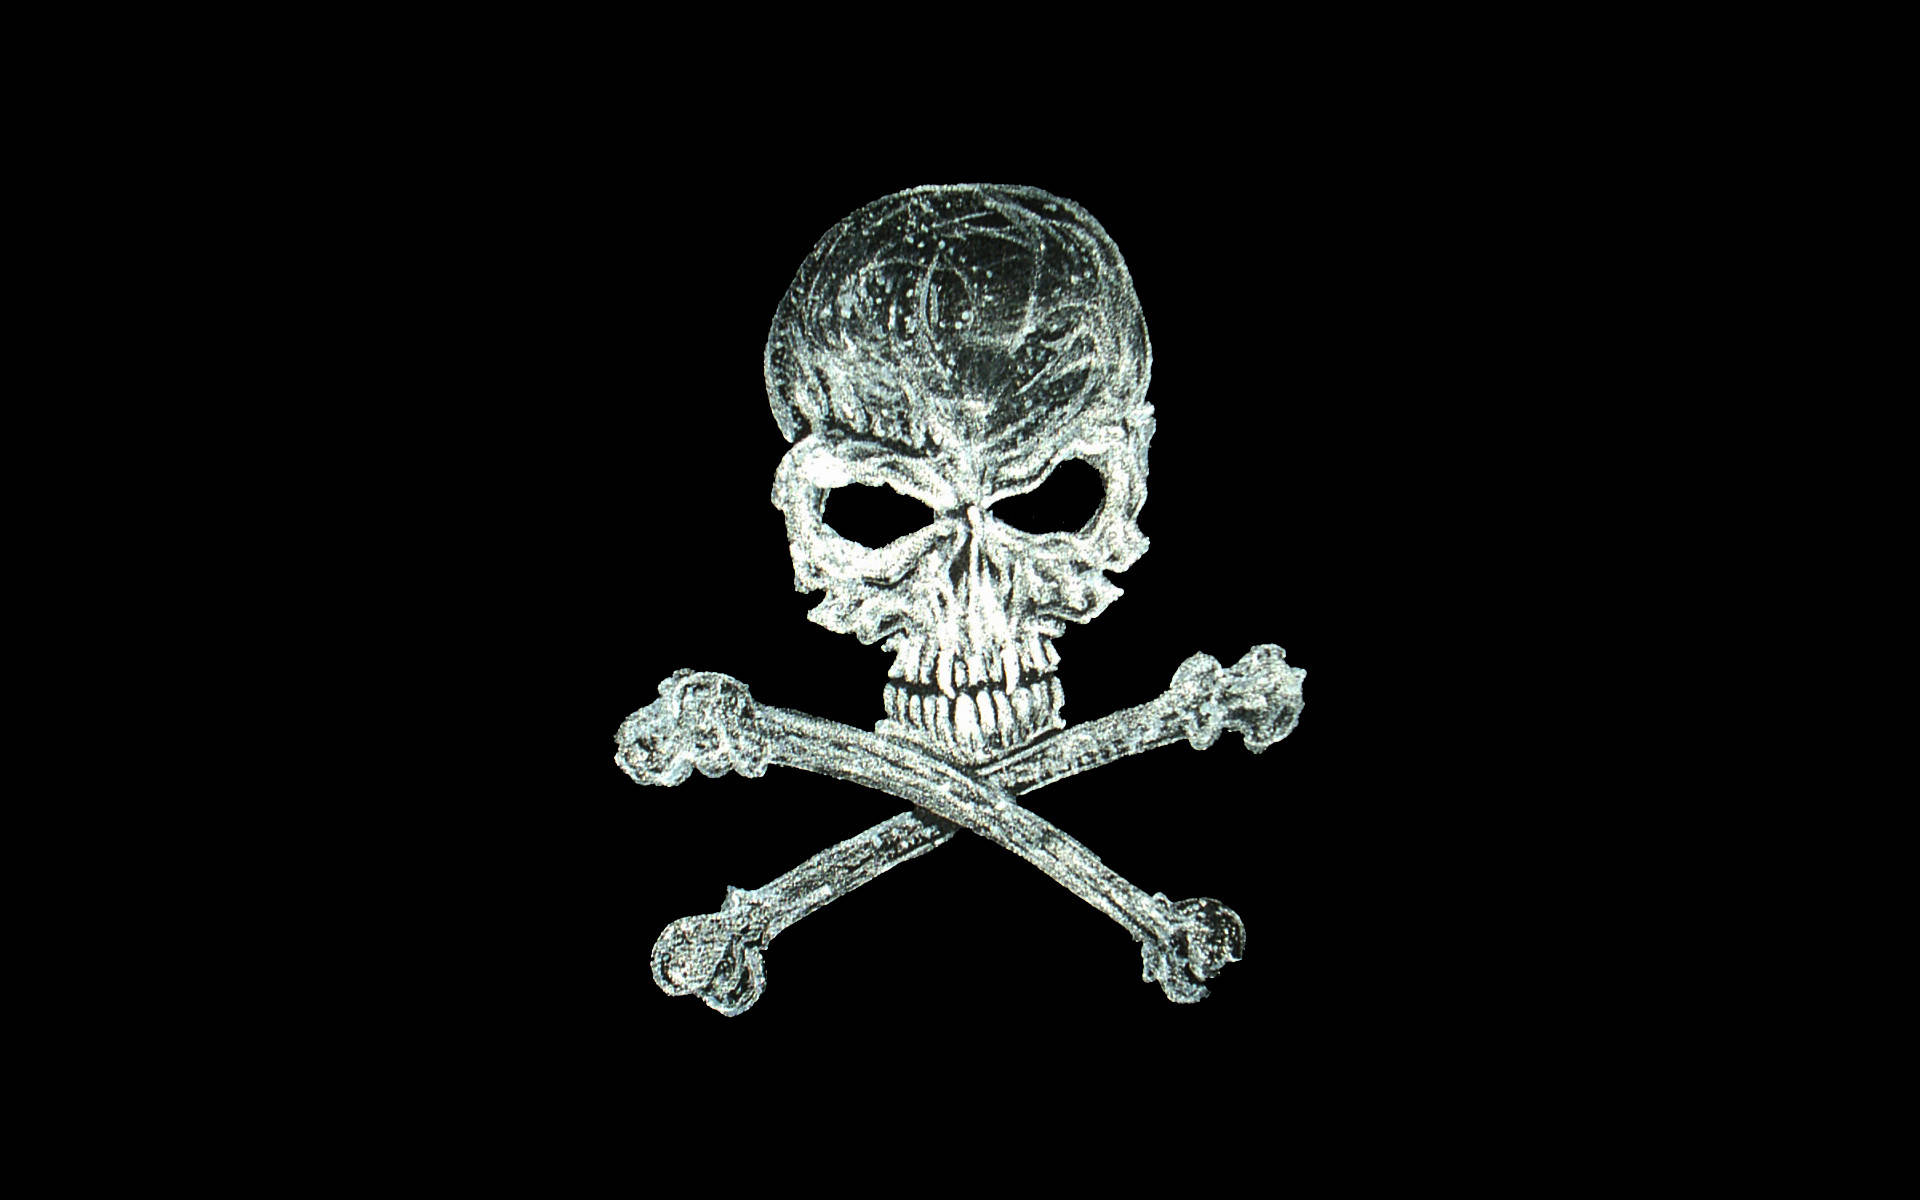 Hd Skull With Crossed Bones Background